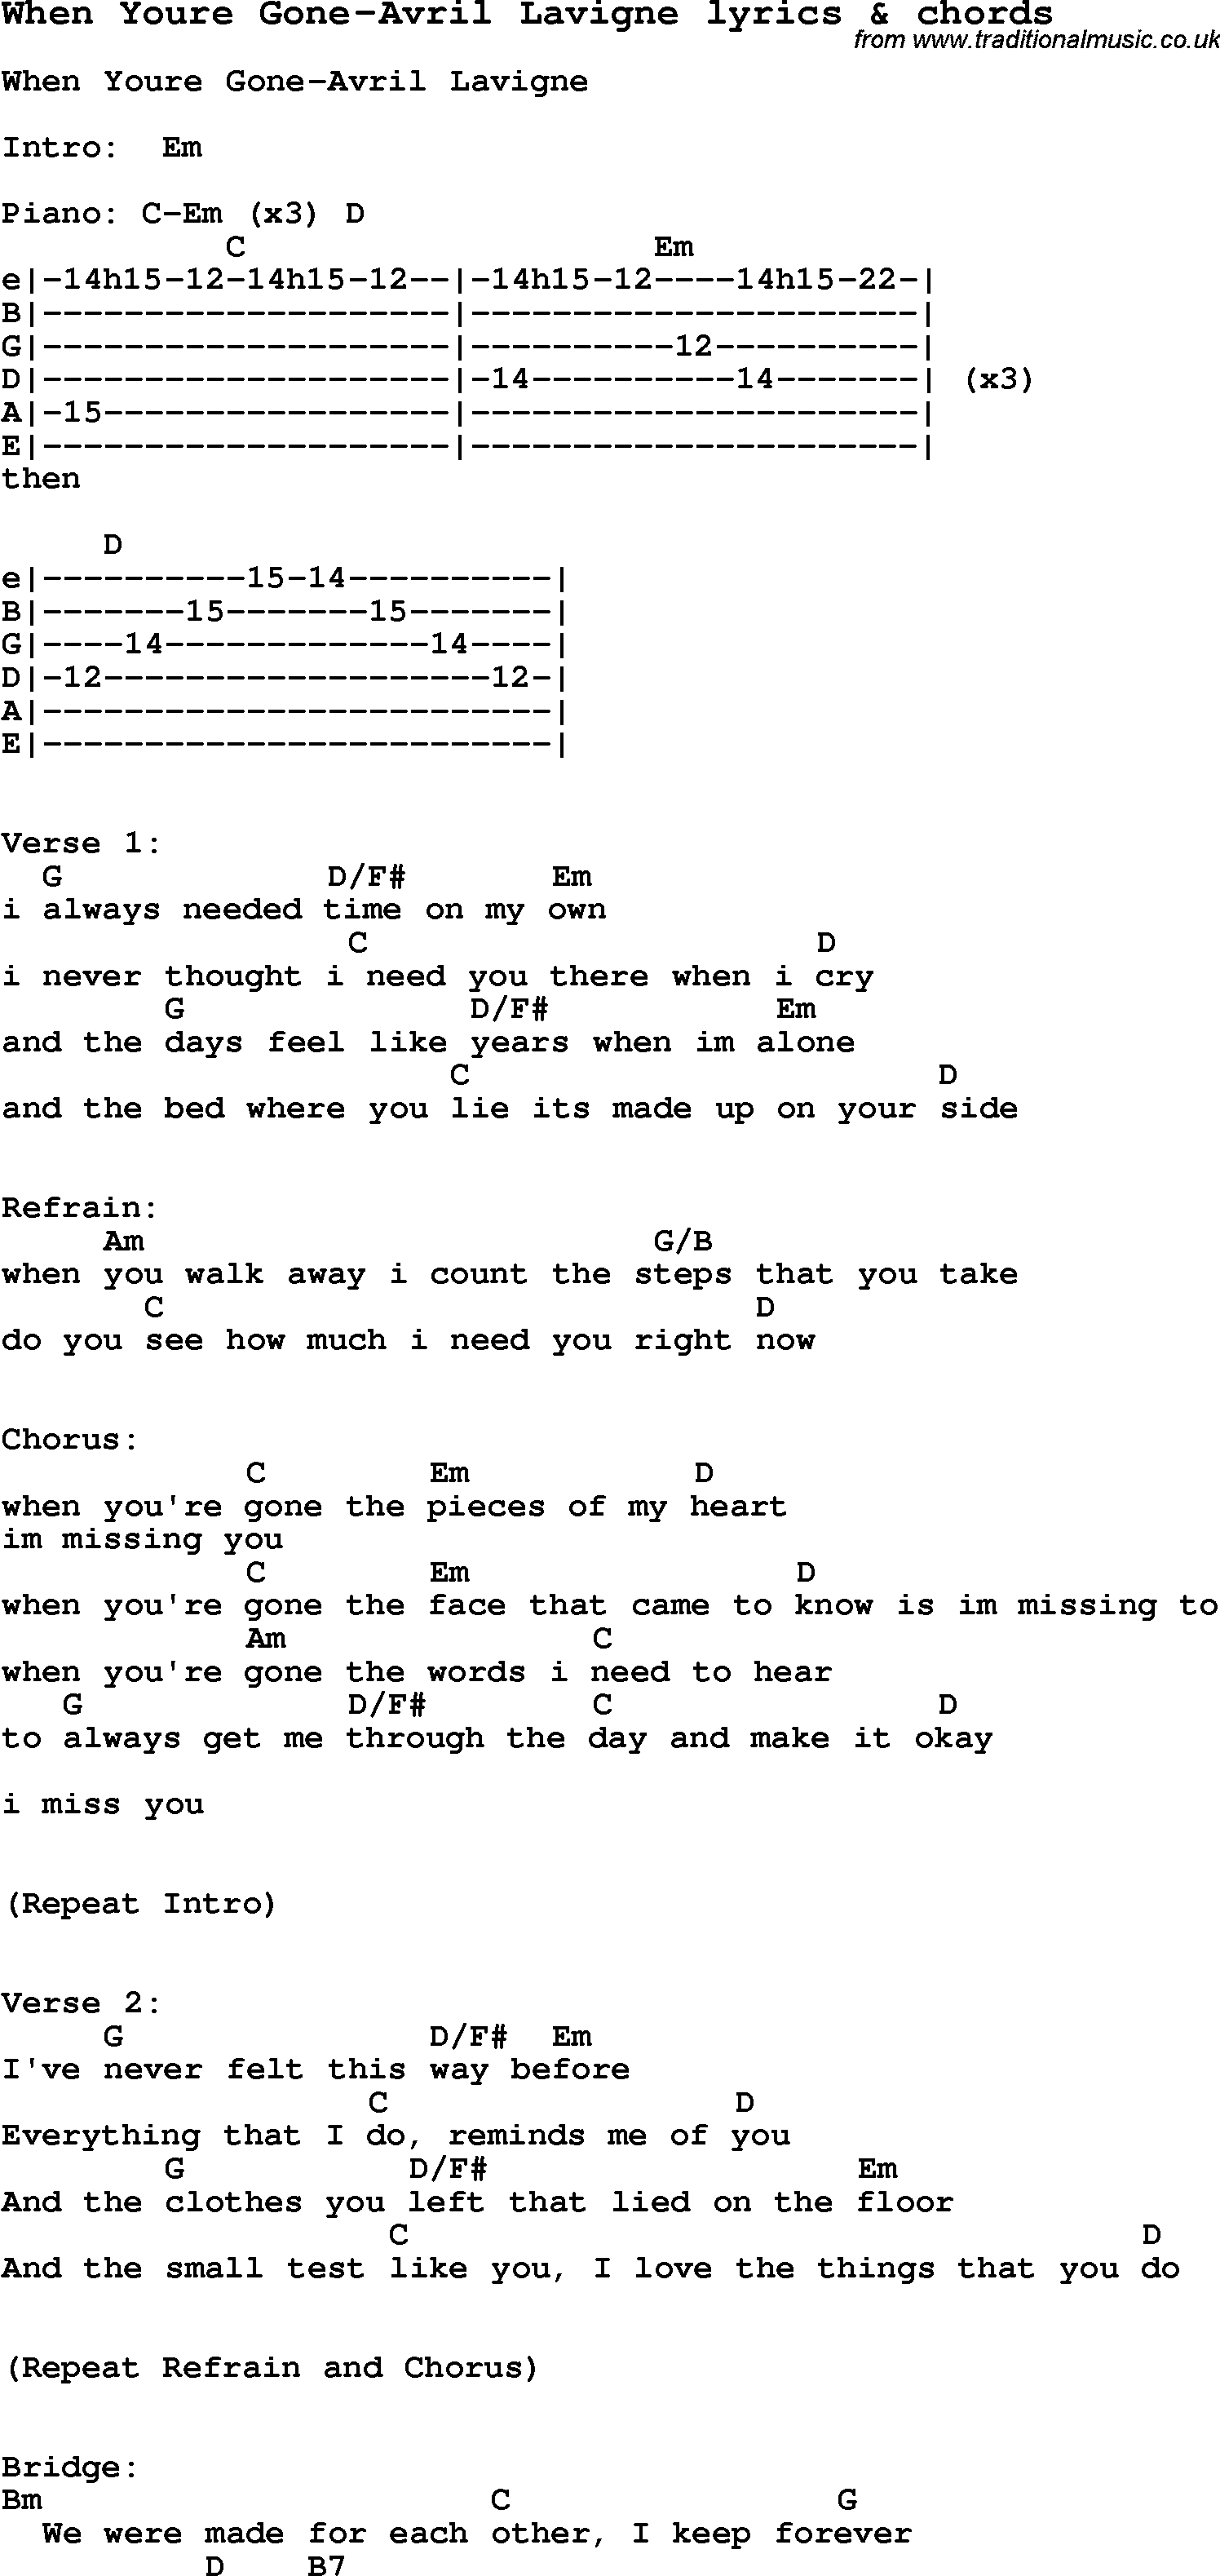 Love Song Lyrics for: When Youre Gone-Avril Lavigne with chords for Ukulele, Guitar Banjo etc.